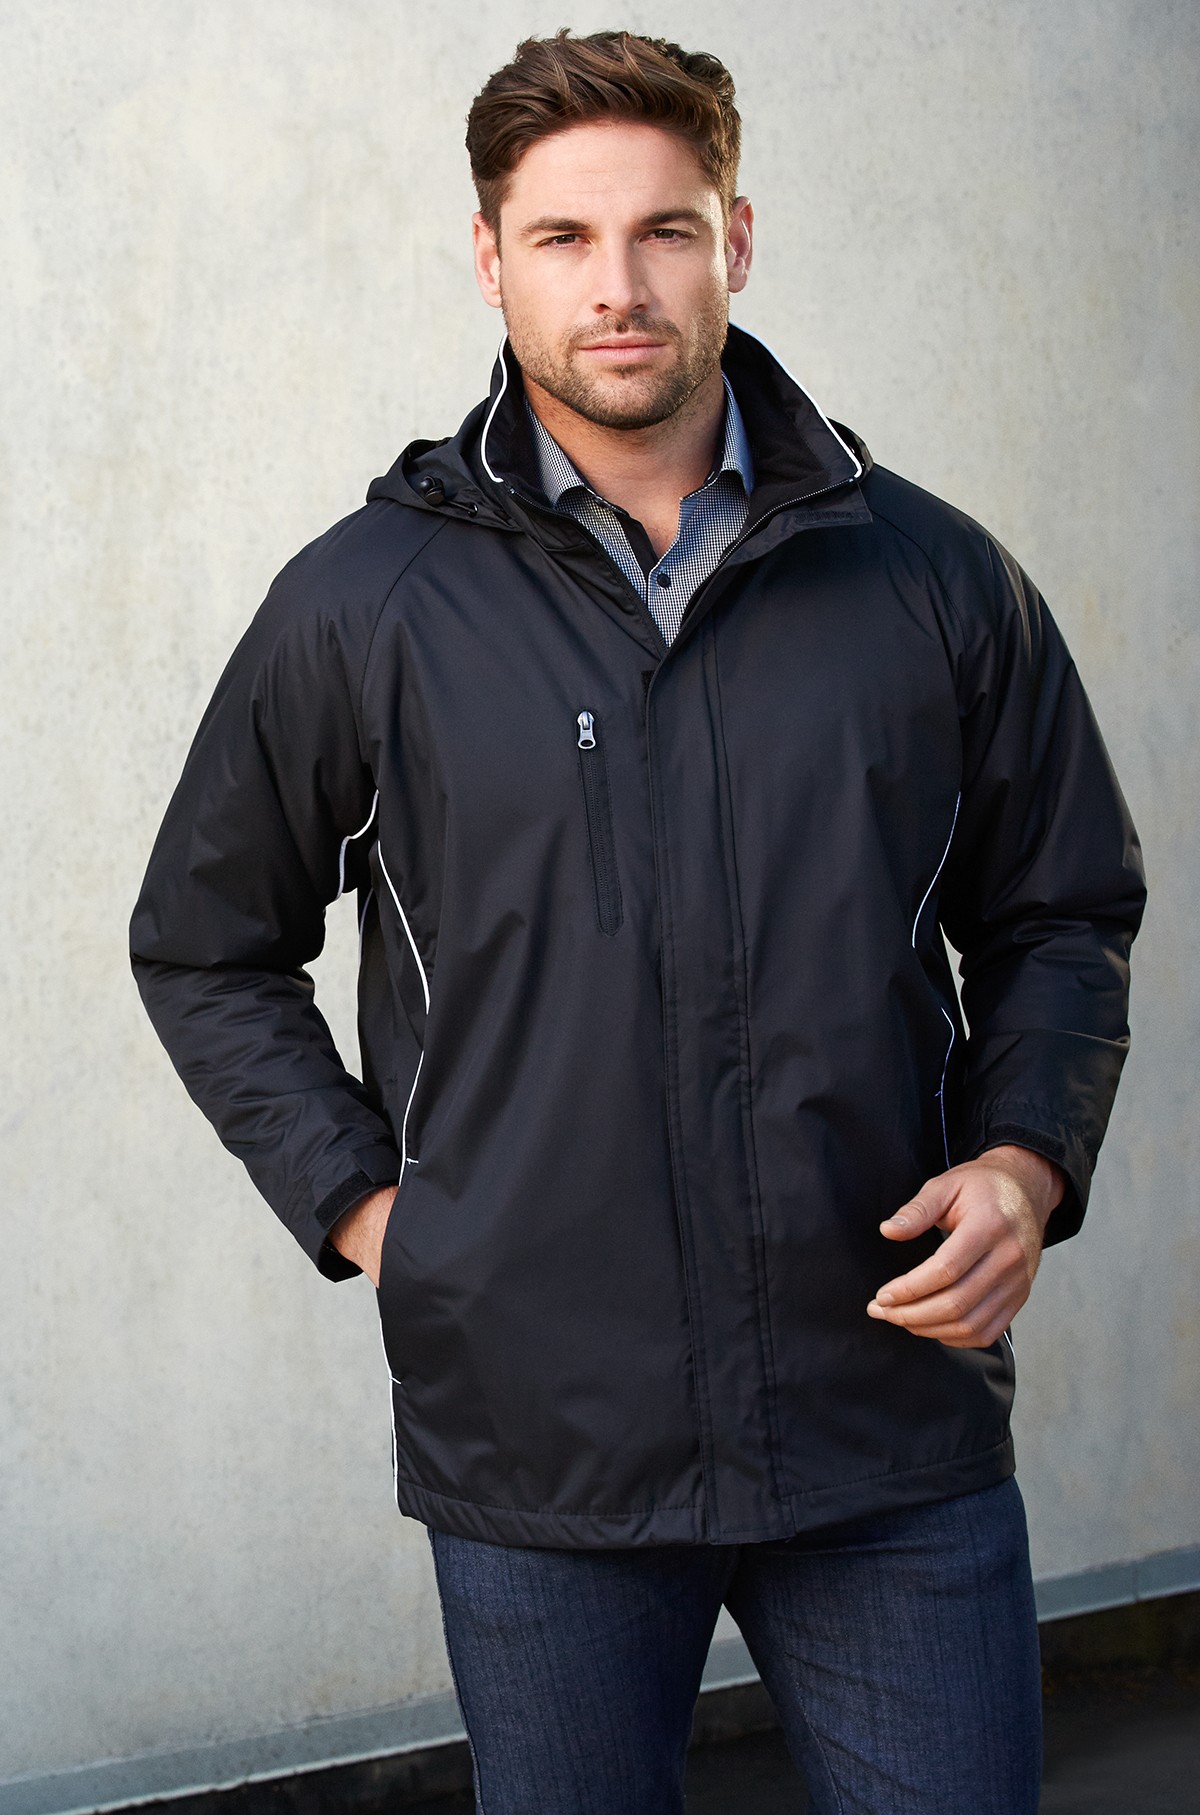 Buy Core Fleece Lined Showerproof Jacket in NZ | The Uniform Centre